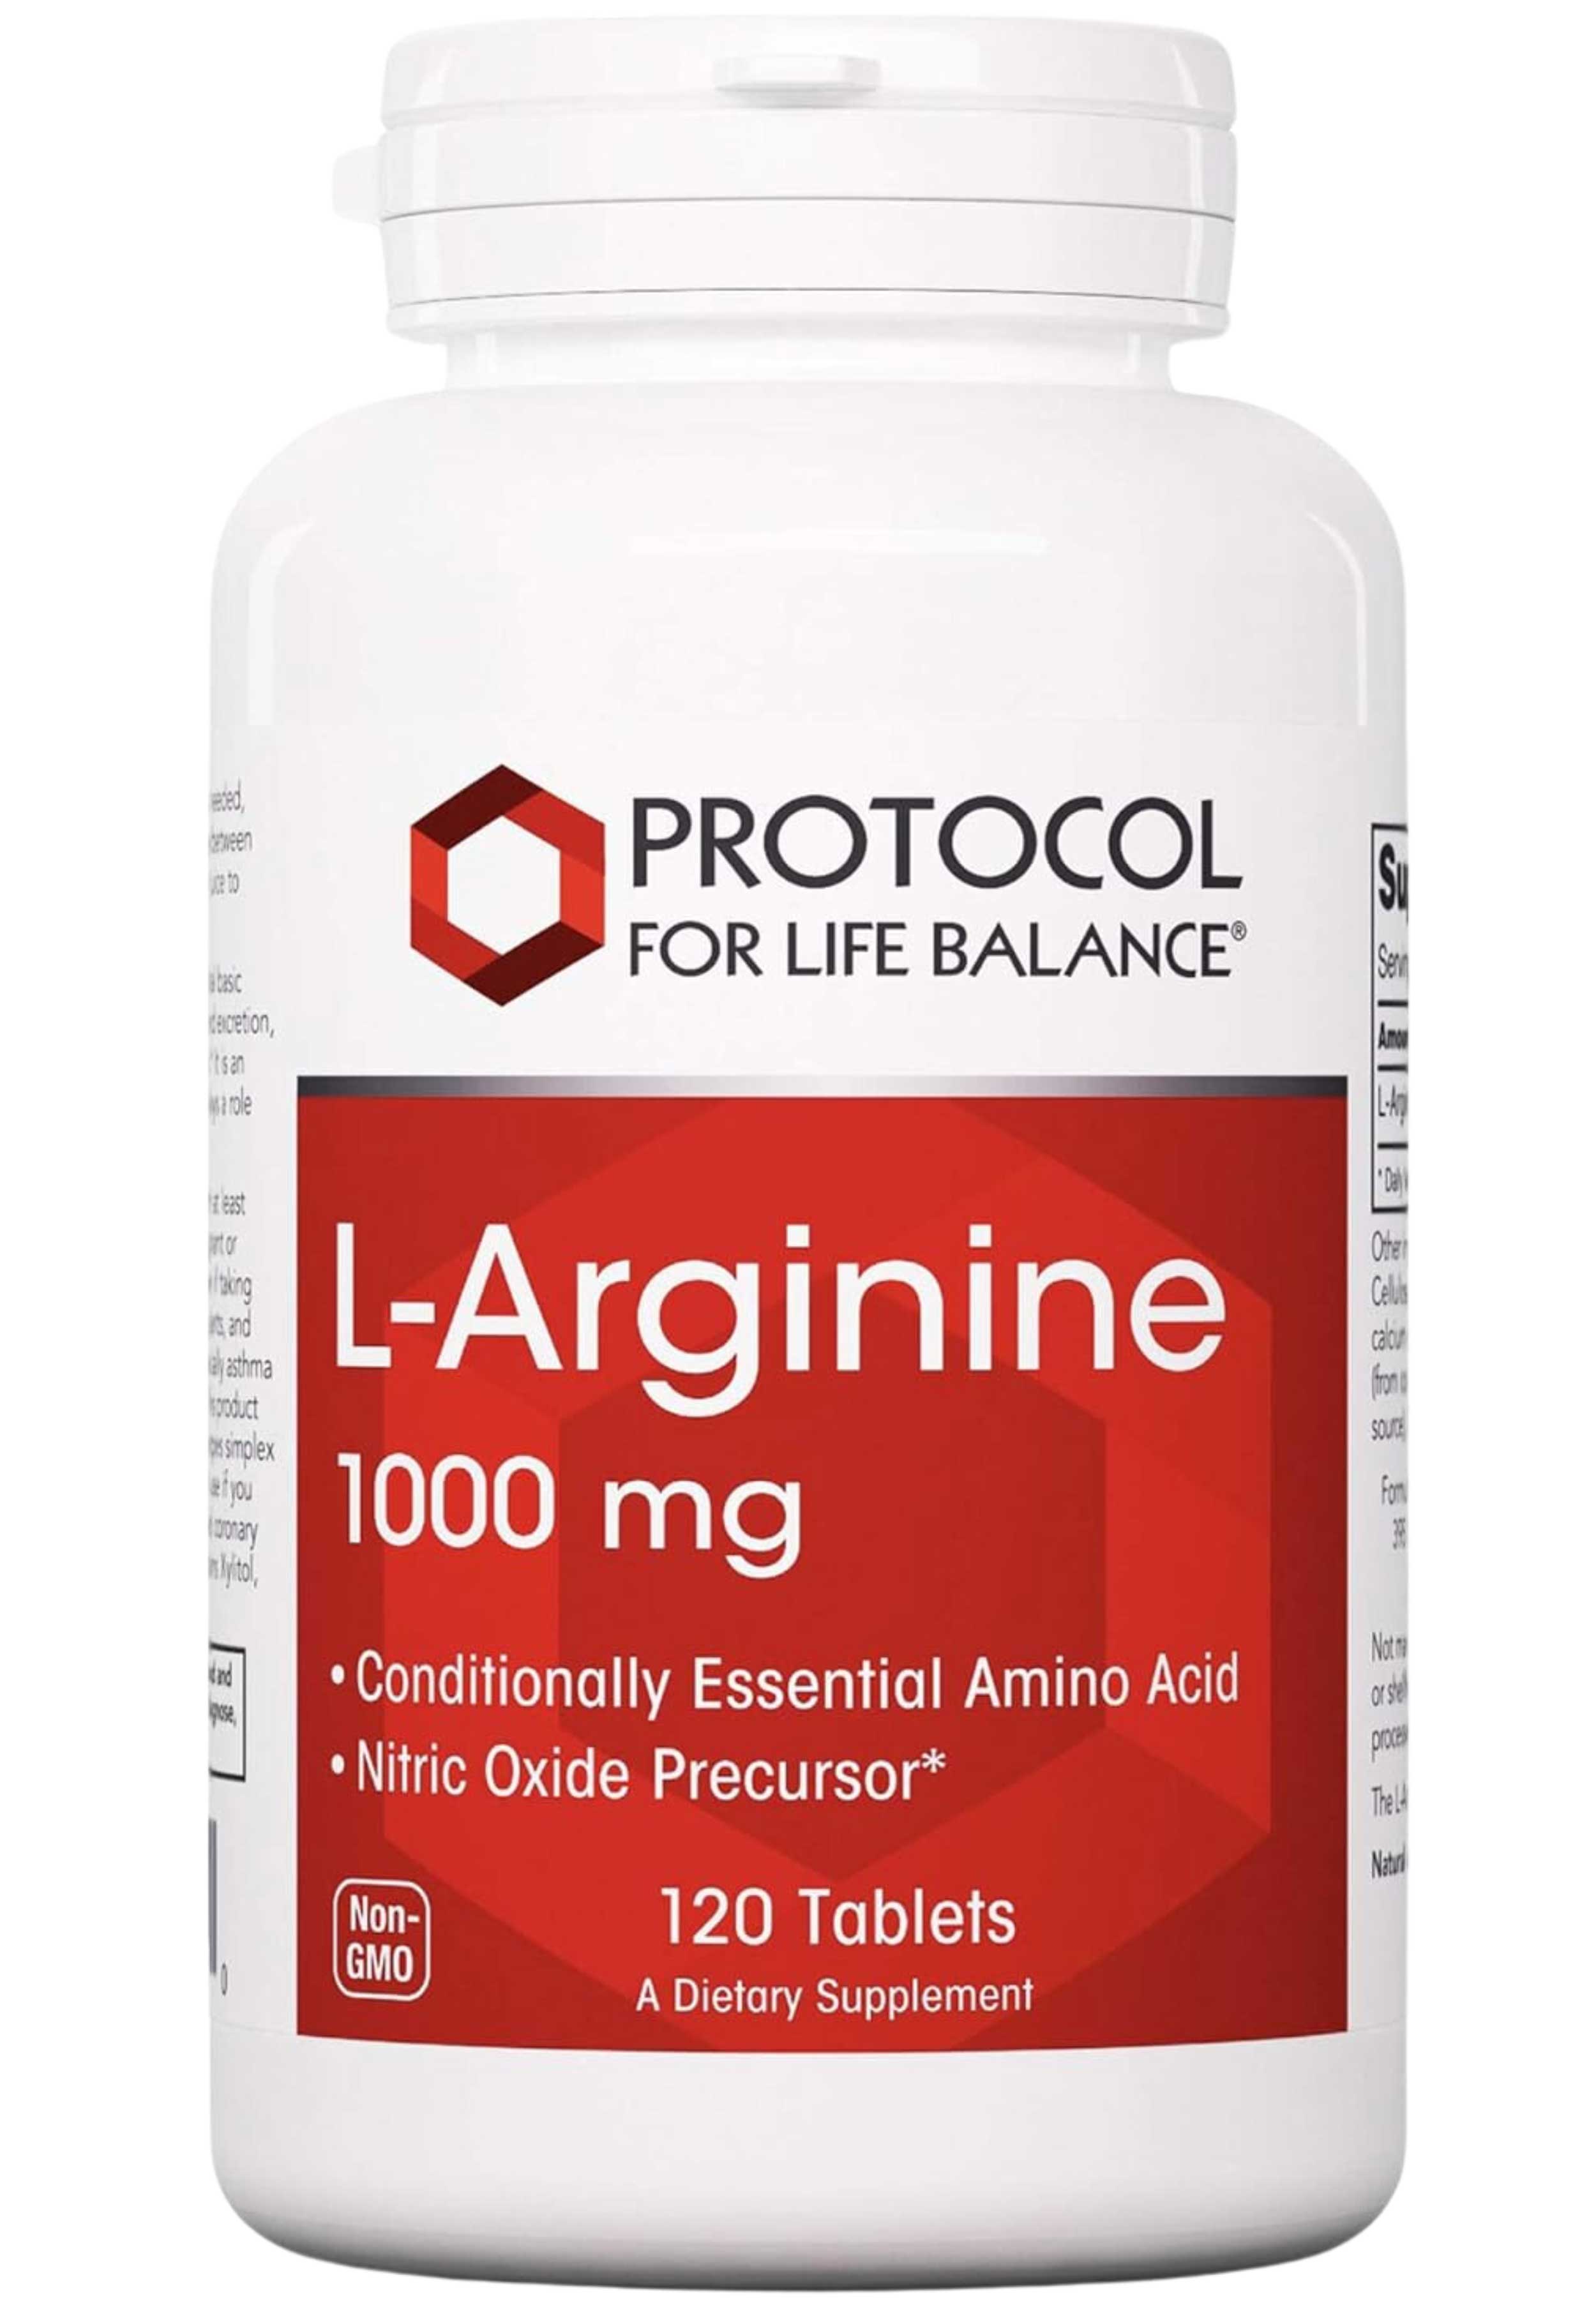 Protocol for Life Balance L-Arginine 1000 mg